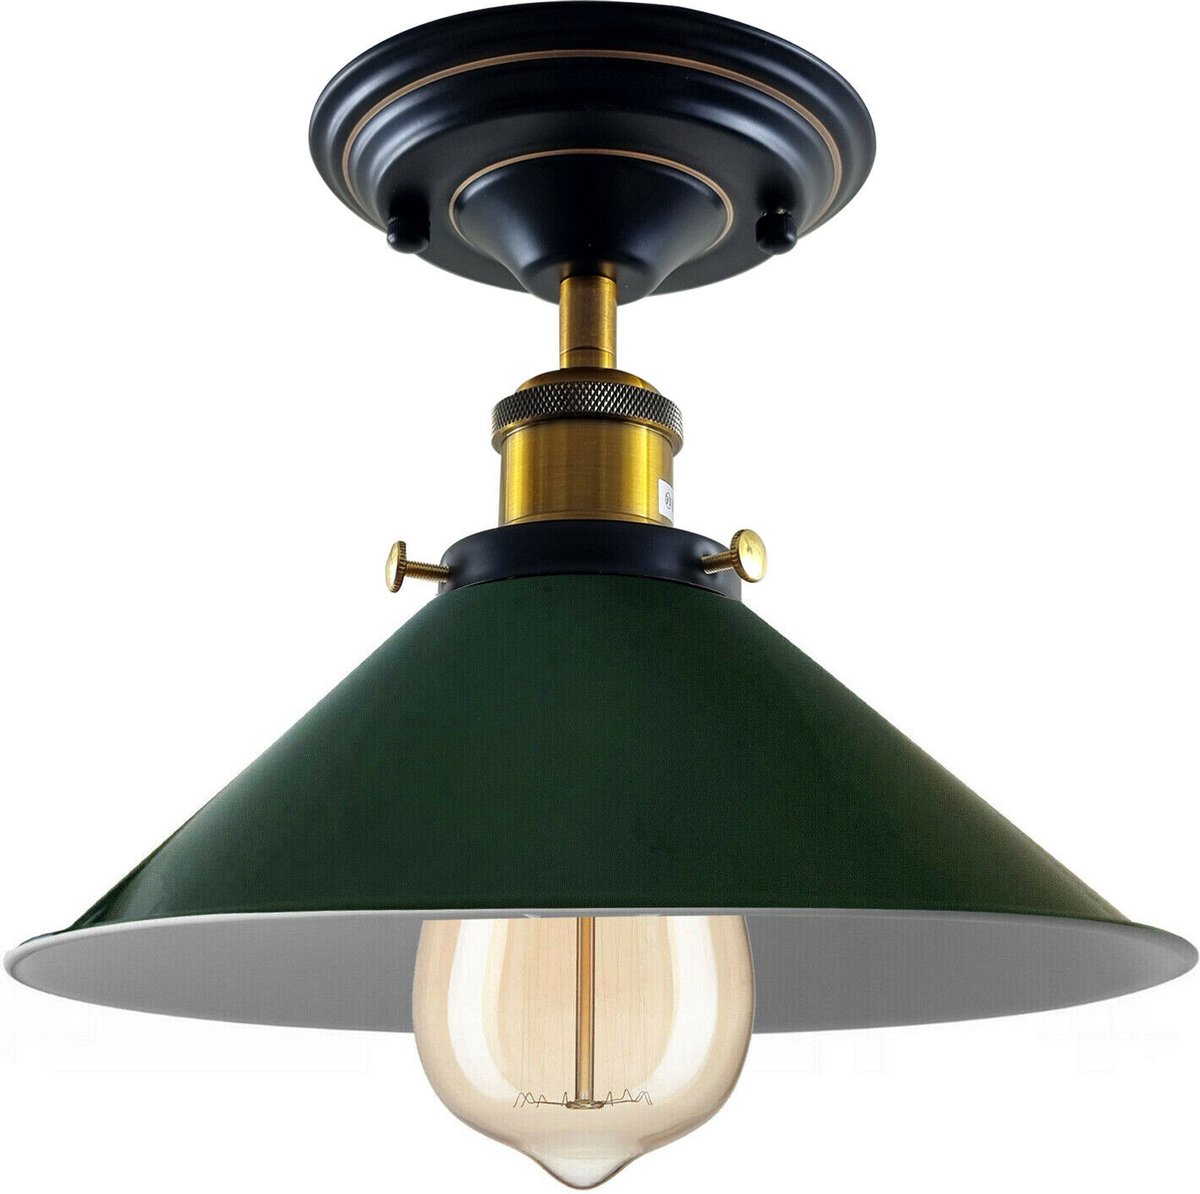 Plafondlamp Modern Industrieel Vintage Stijl Metalen Inbouwplafondlamp - Groen